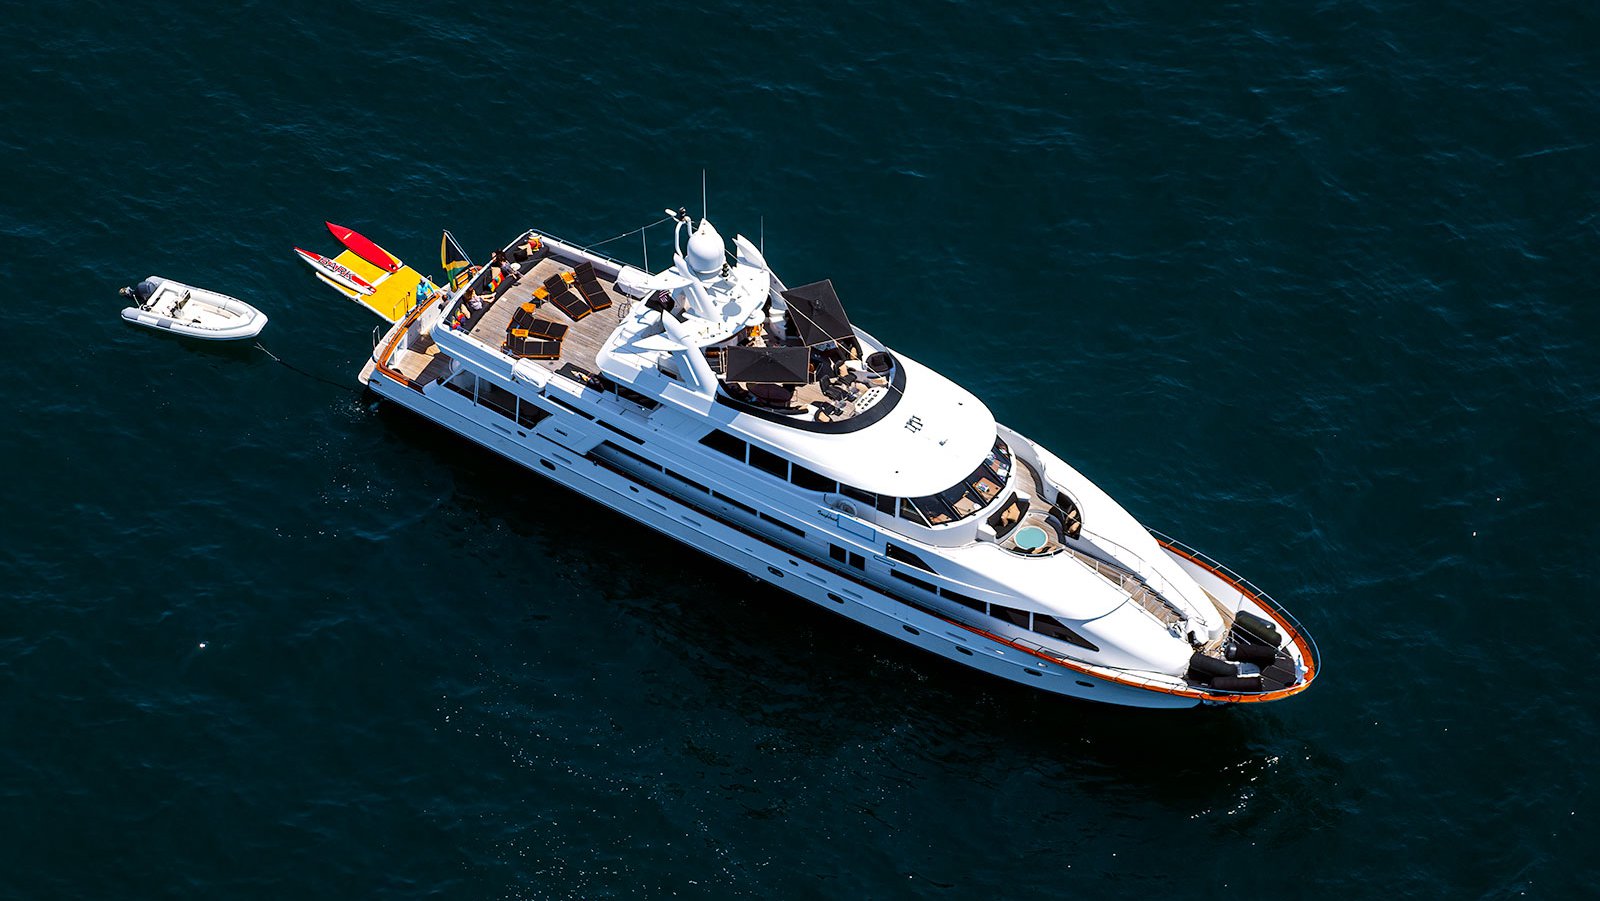 Close-up blog photo of megayacht "Inspired" anchored in Emerald Bay in Laguna Beach, California